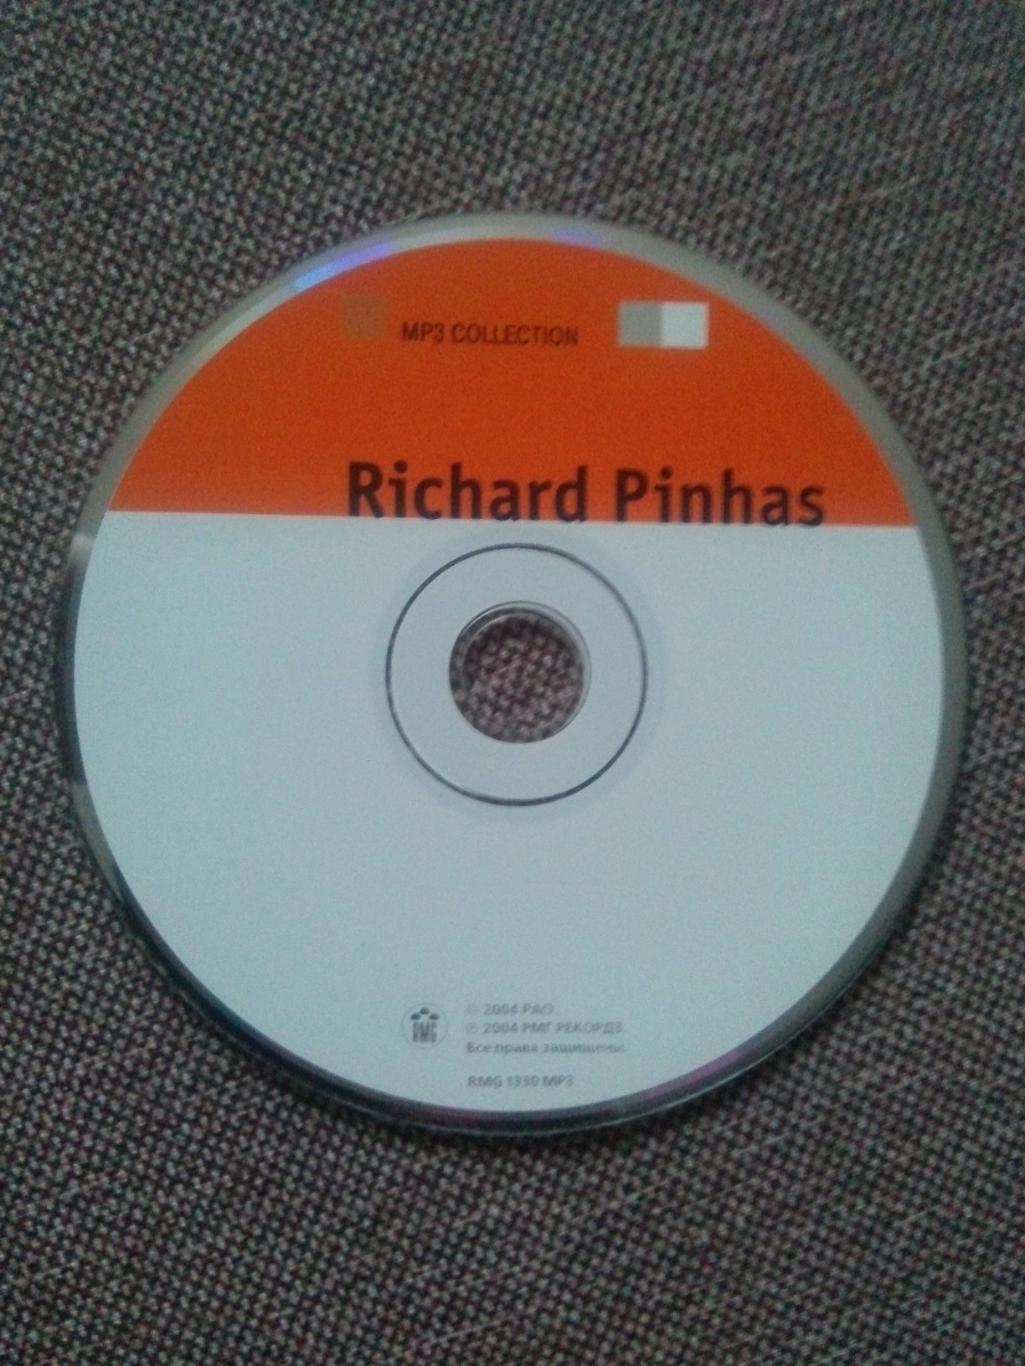 MP - 3 CD диск : Richard Pinhas (Ричард Пинхас) 1975 - 1992 гг. (9 альбомов) Рок 5